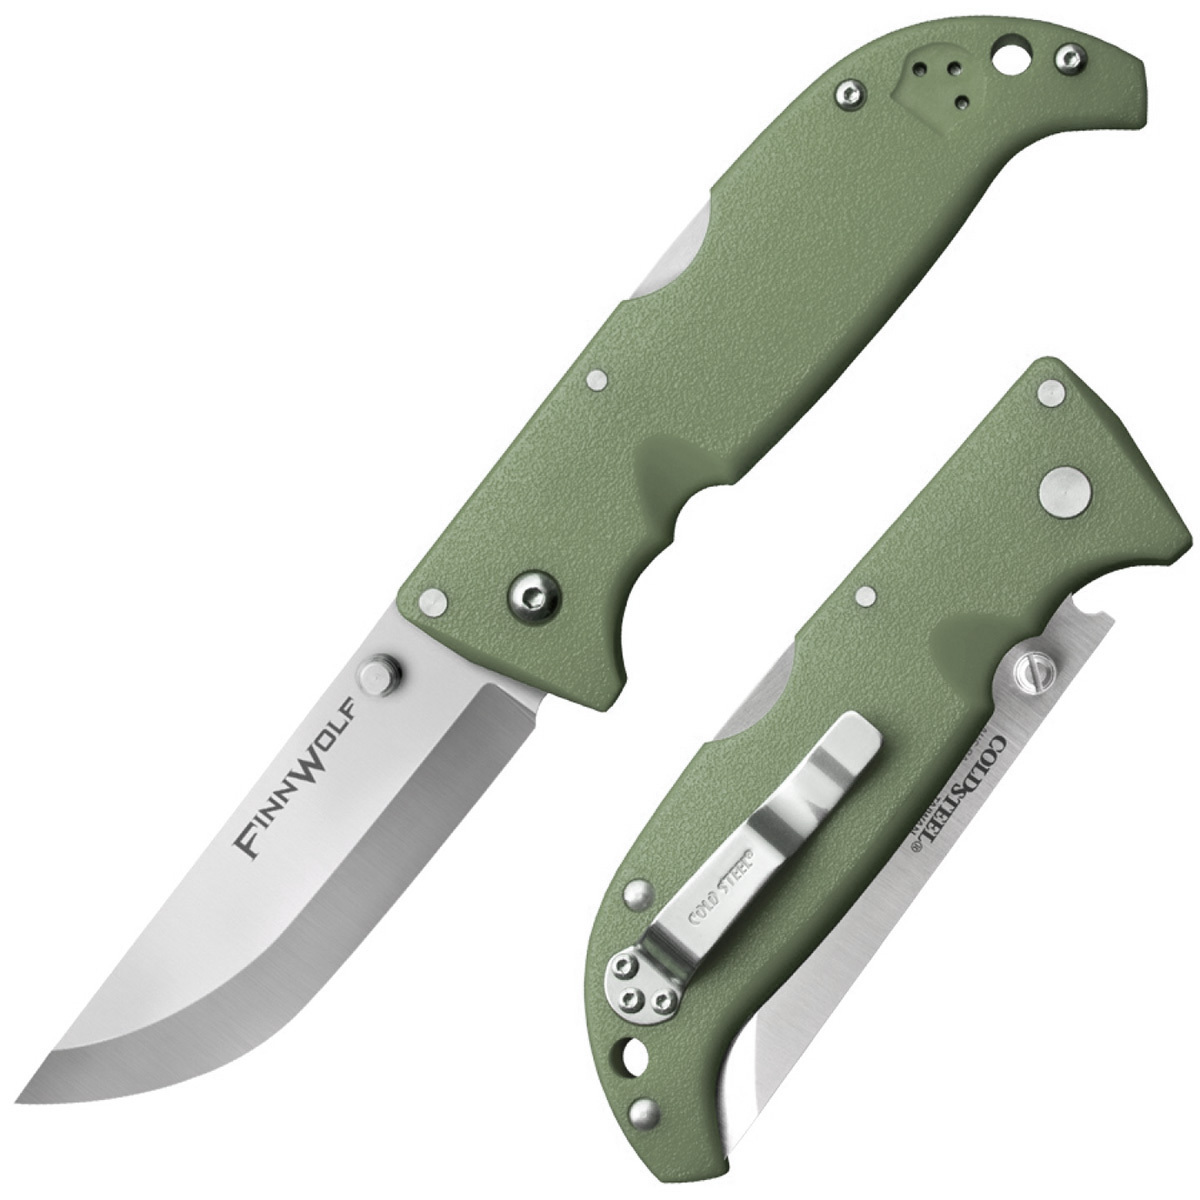 Складной нож Finn Wolf, Cold Steel 20NPFZ, сталь AUS-8A, рукоять Grivory® (высококачественный пластик), Зеленый, блистер, Бренды, Cold Steel